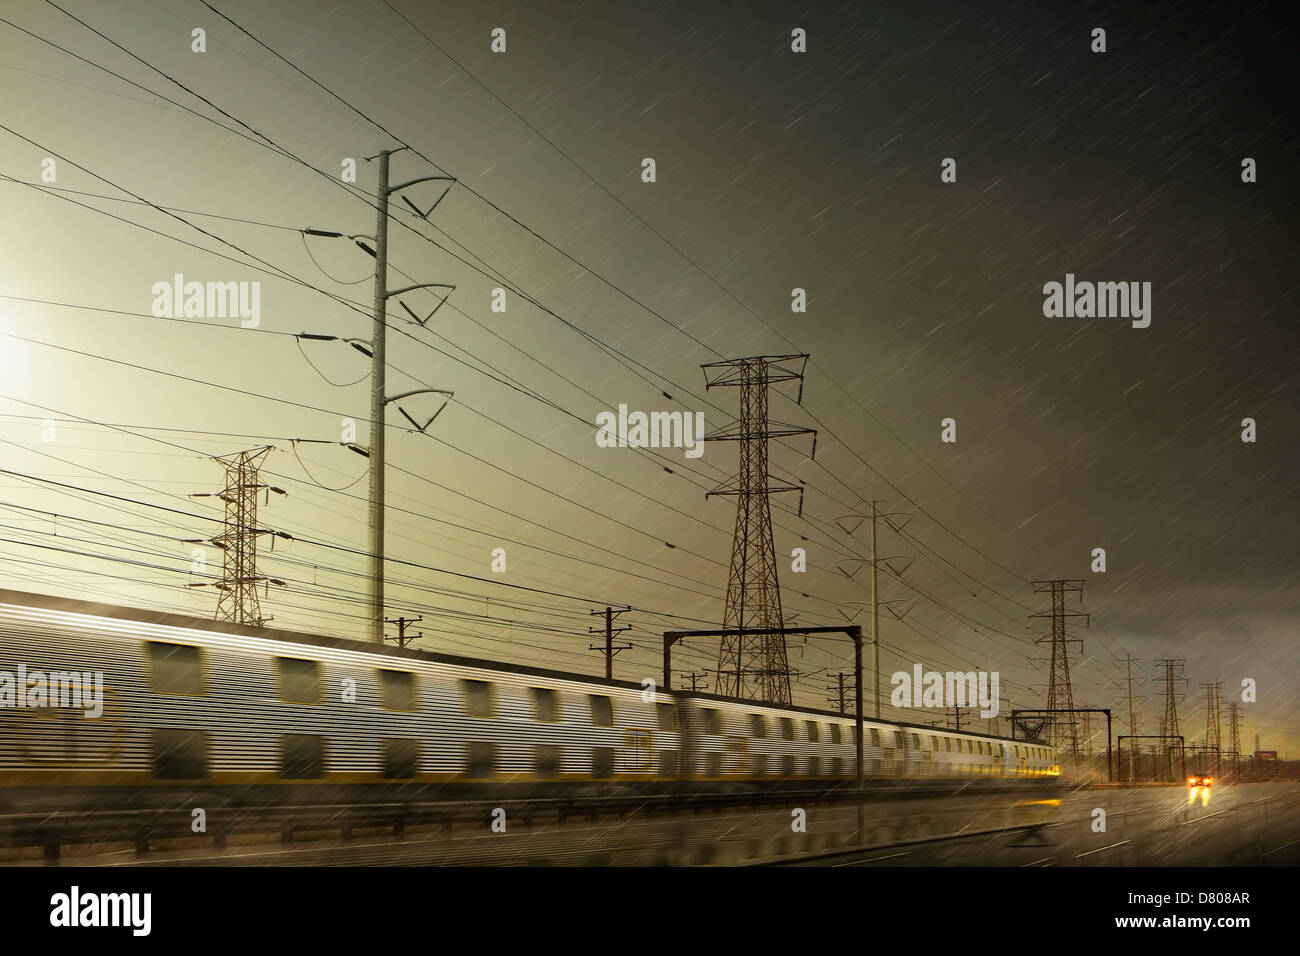 Train speeding by power lines Stock Photo